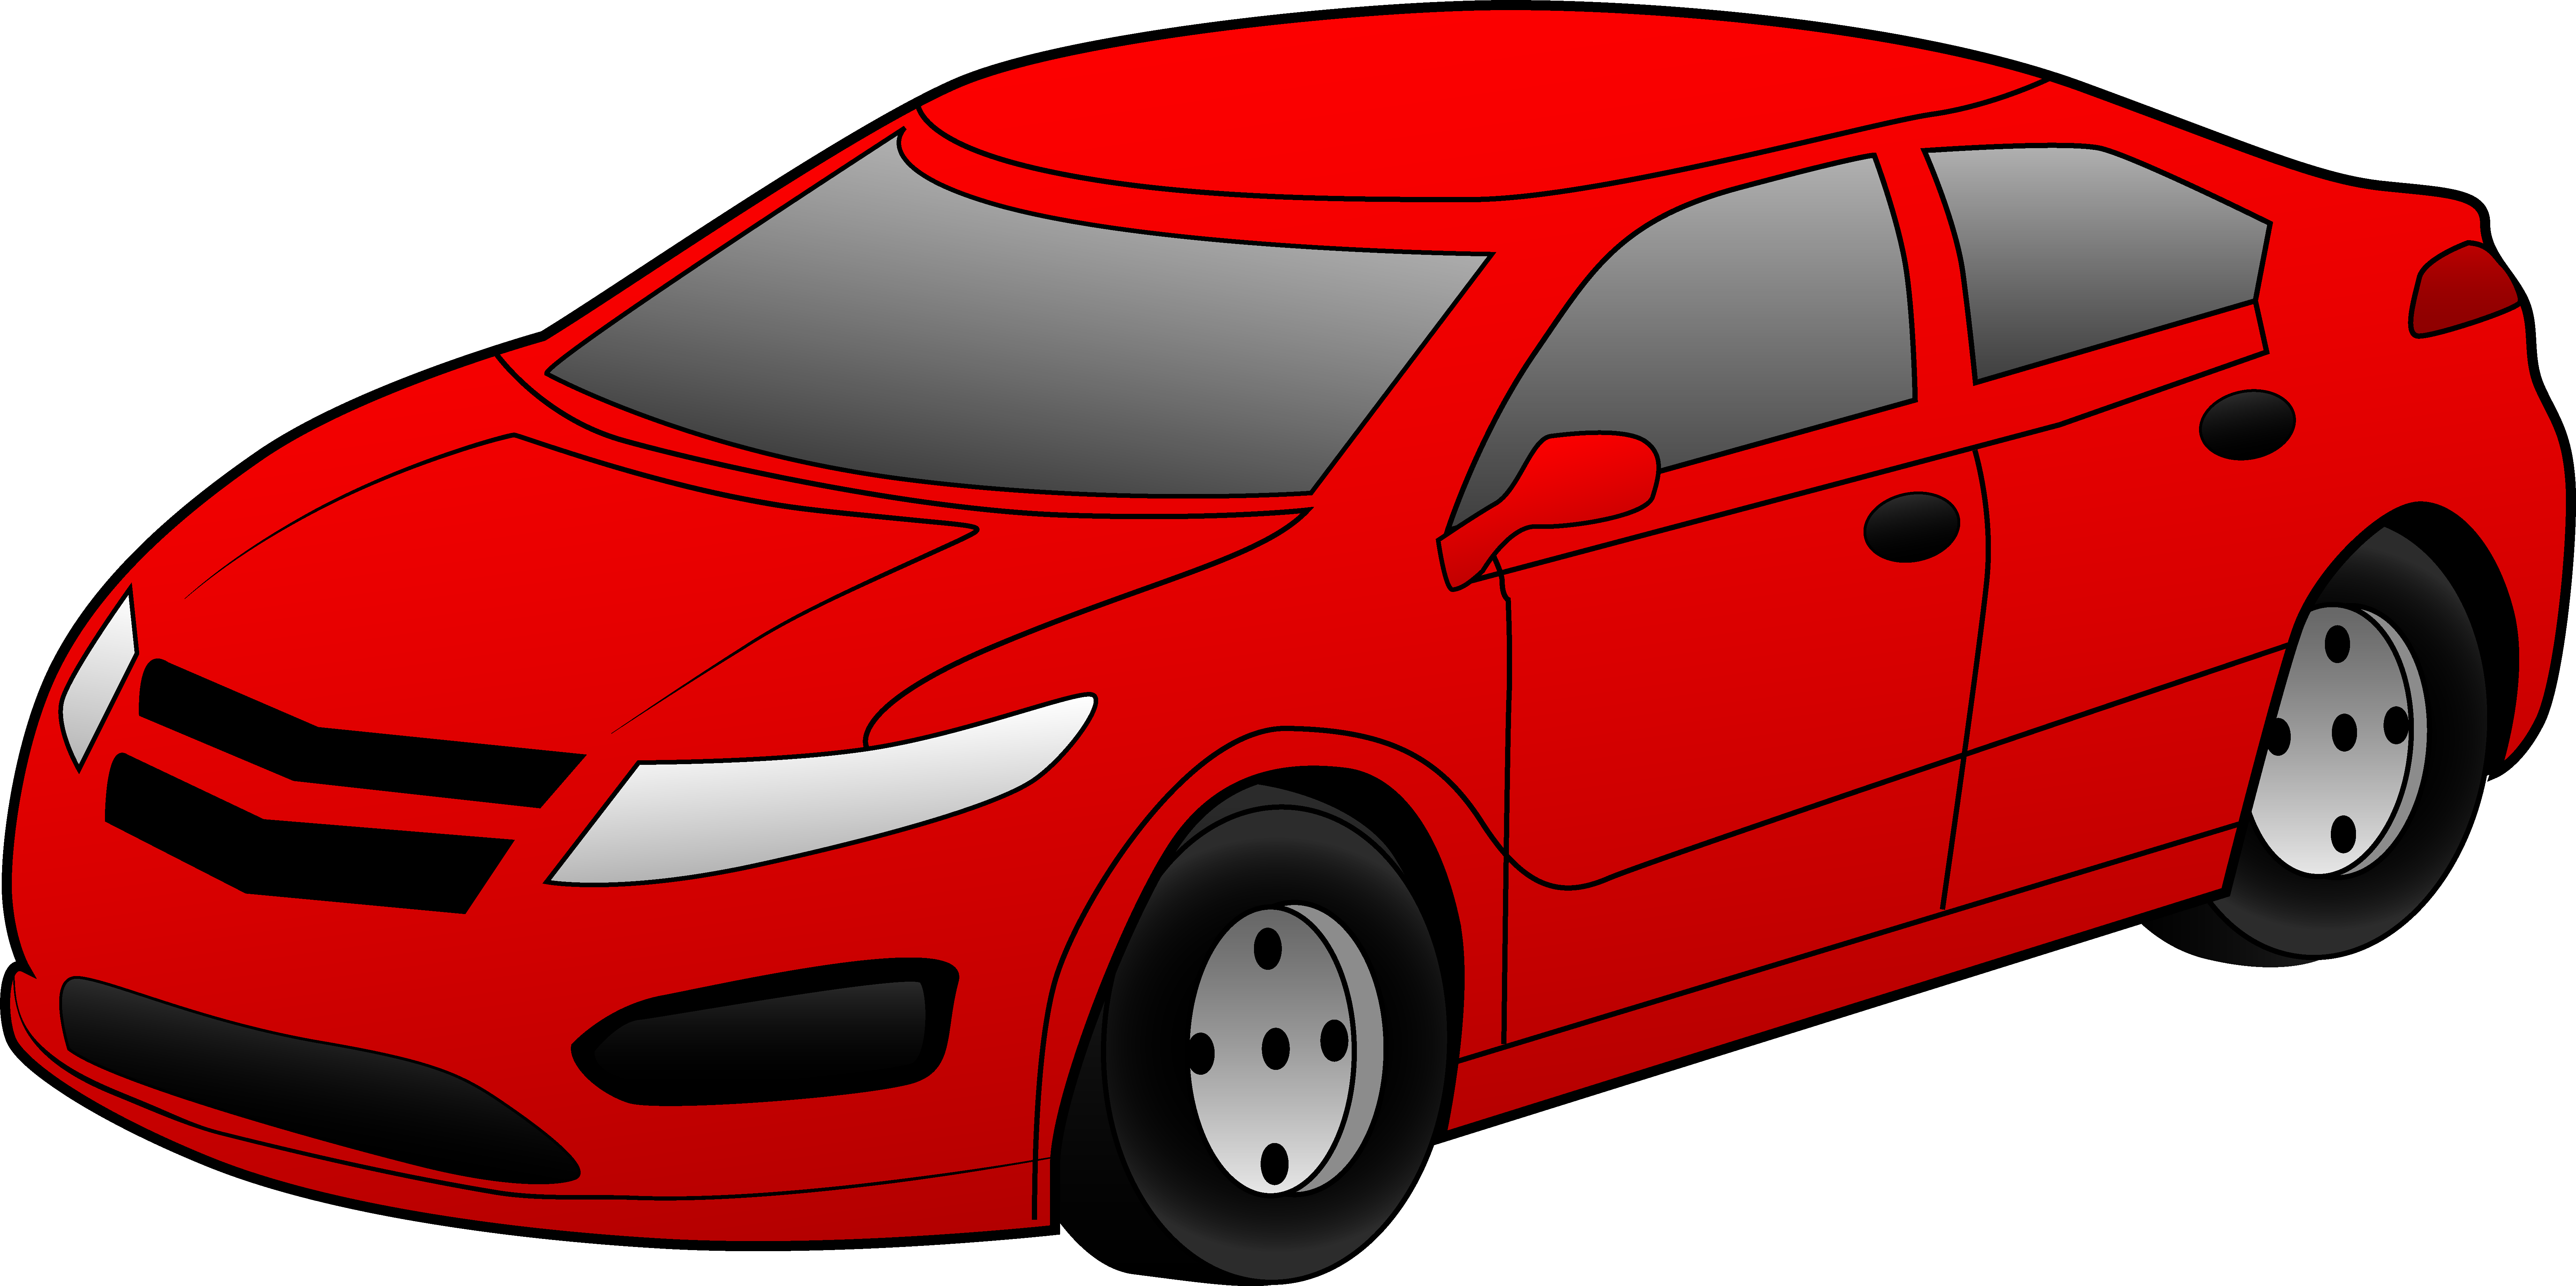 Free Red Sports Car Clip Art